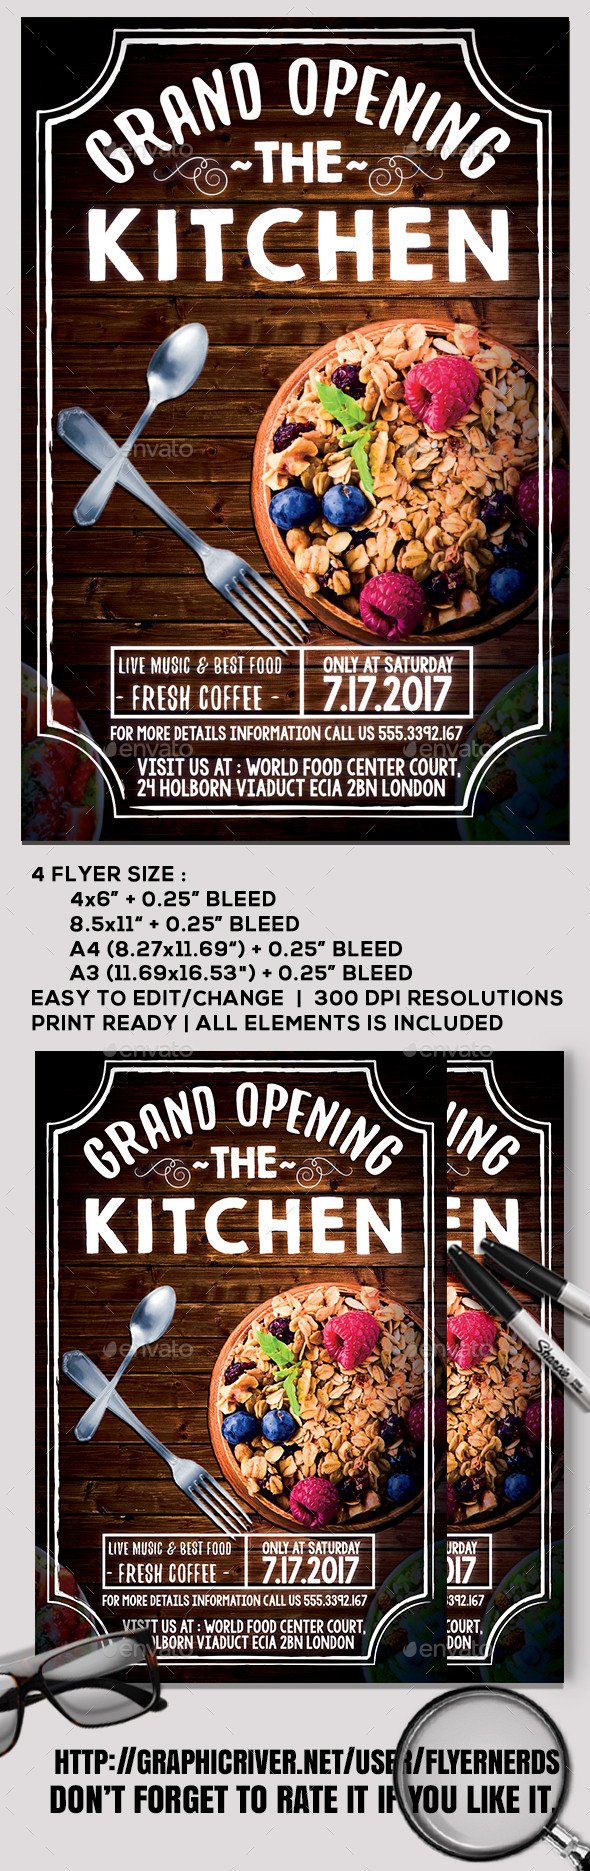 Restaurant Grand Opening Flyer by flyernerds